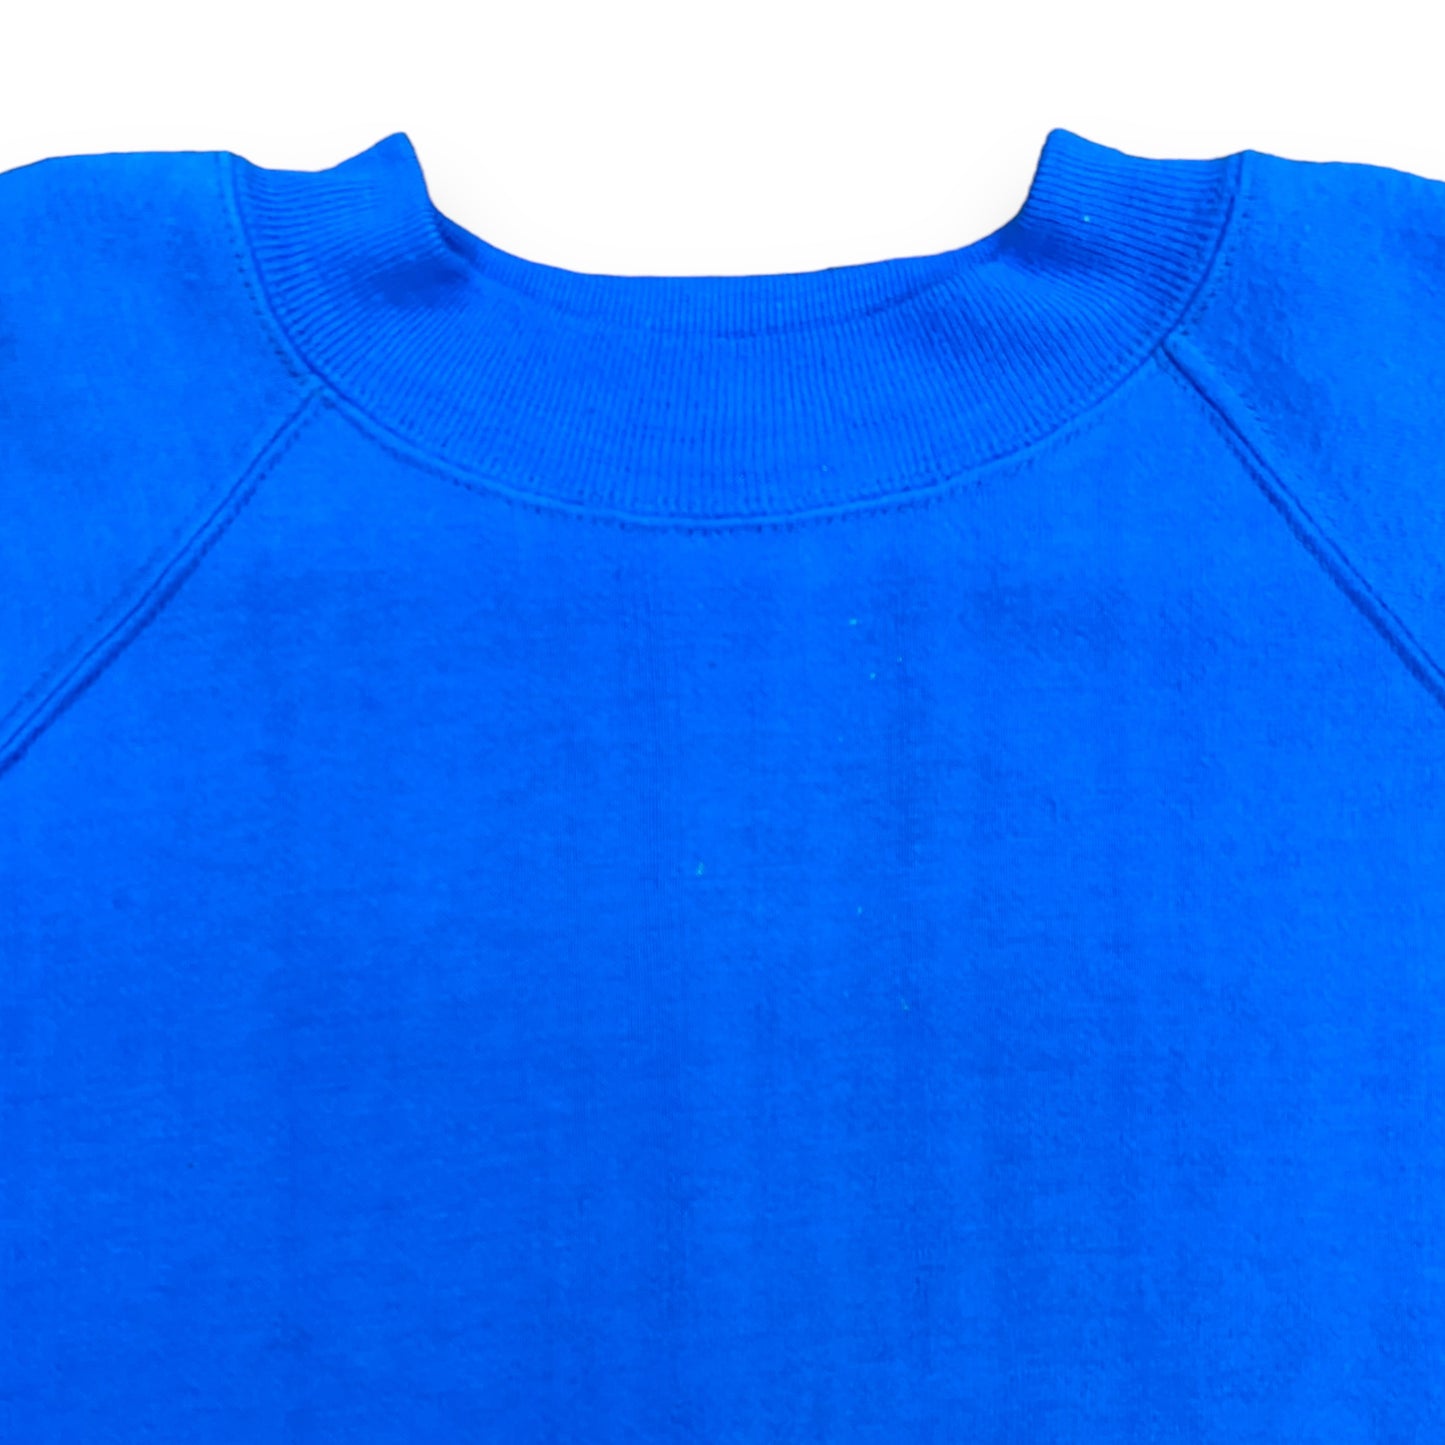 1980s Blue Short Sleeve Raglan Sweatshirt - Size Large